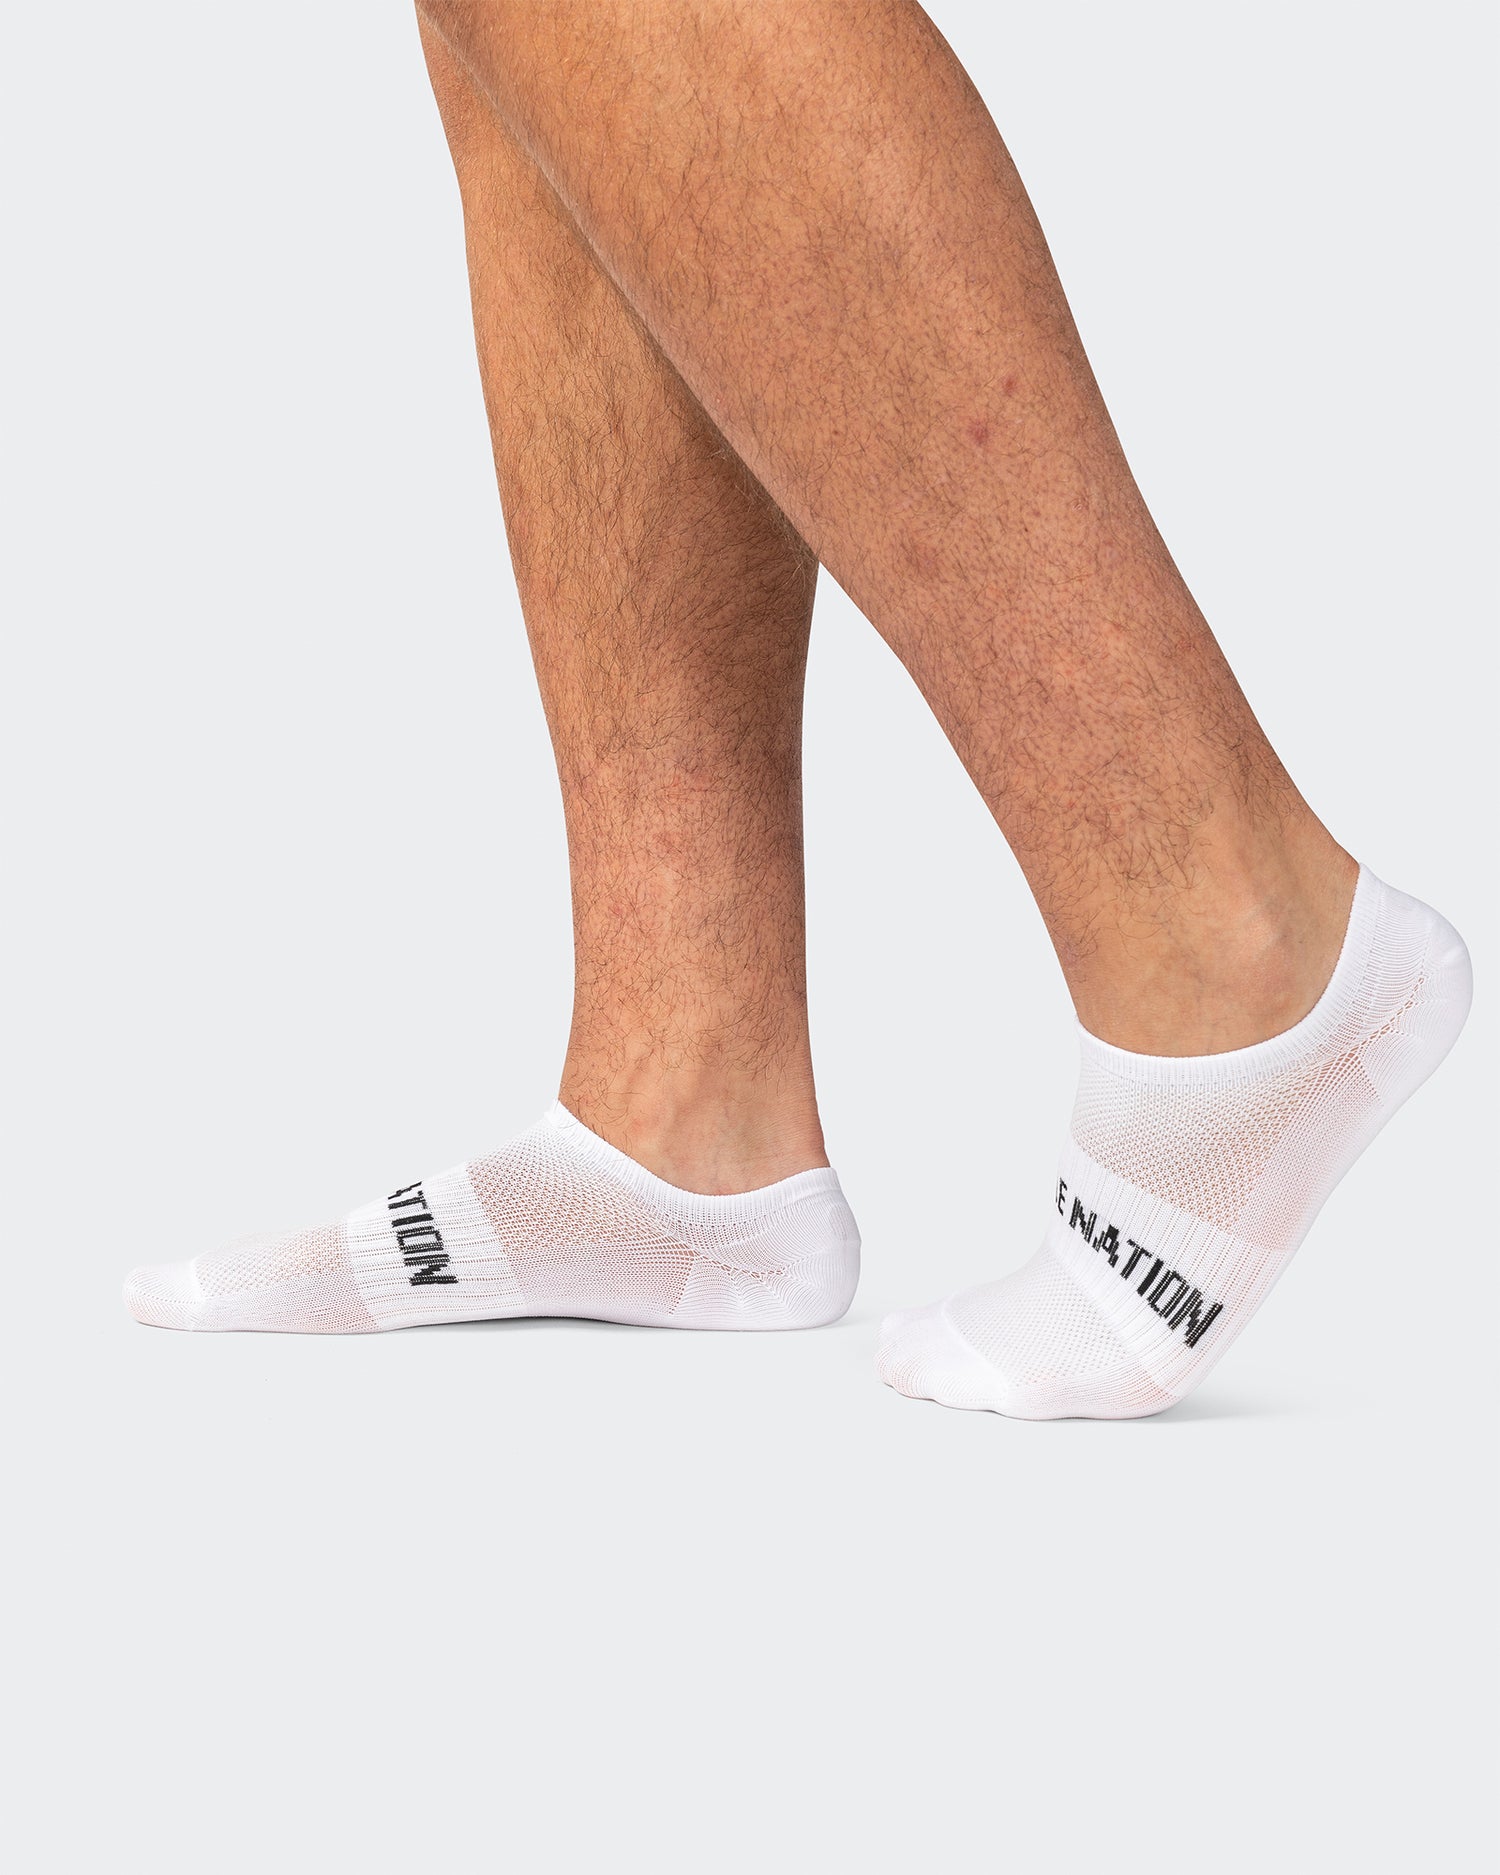 Mens Low Cut No Show Socks - White (2 Pack)